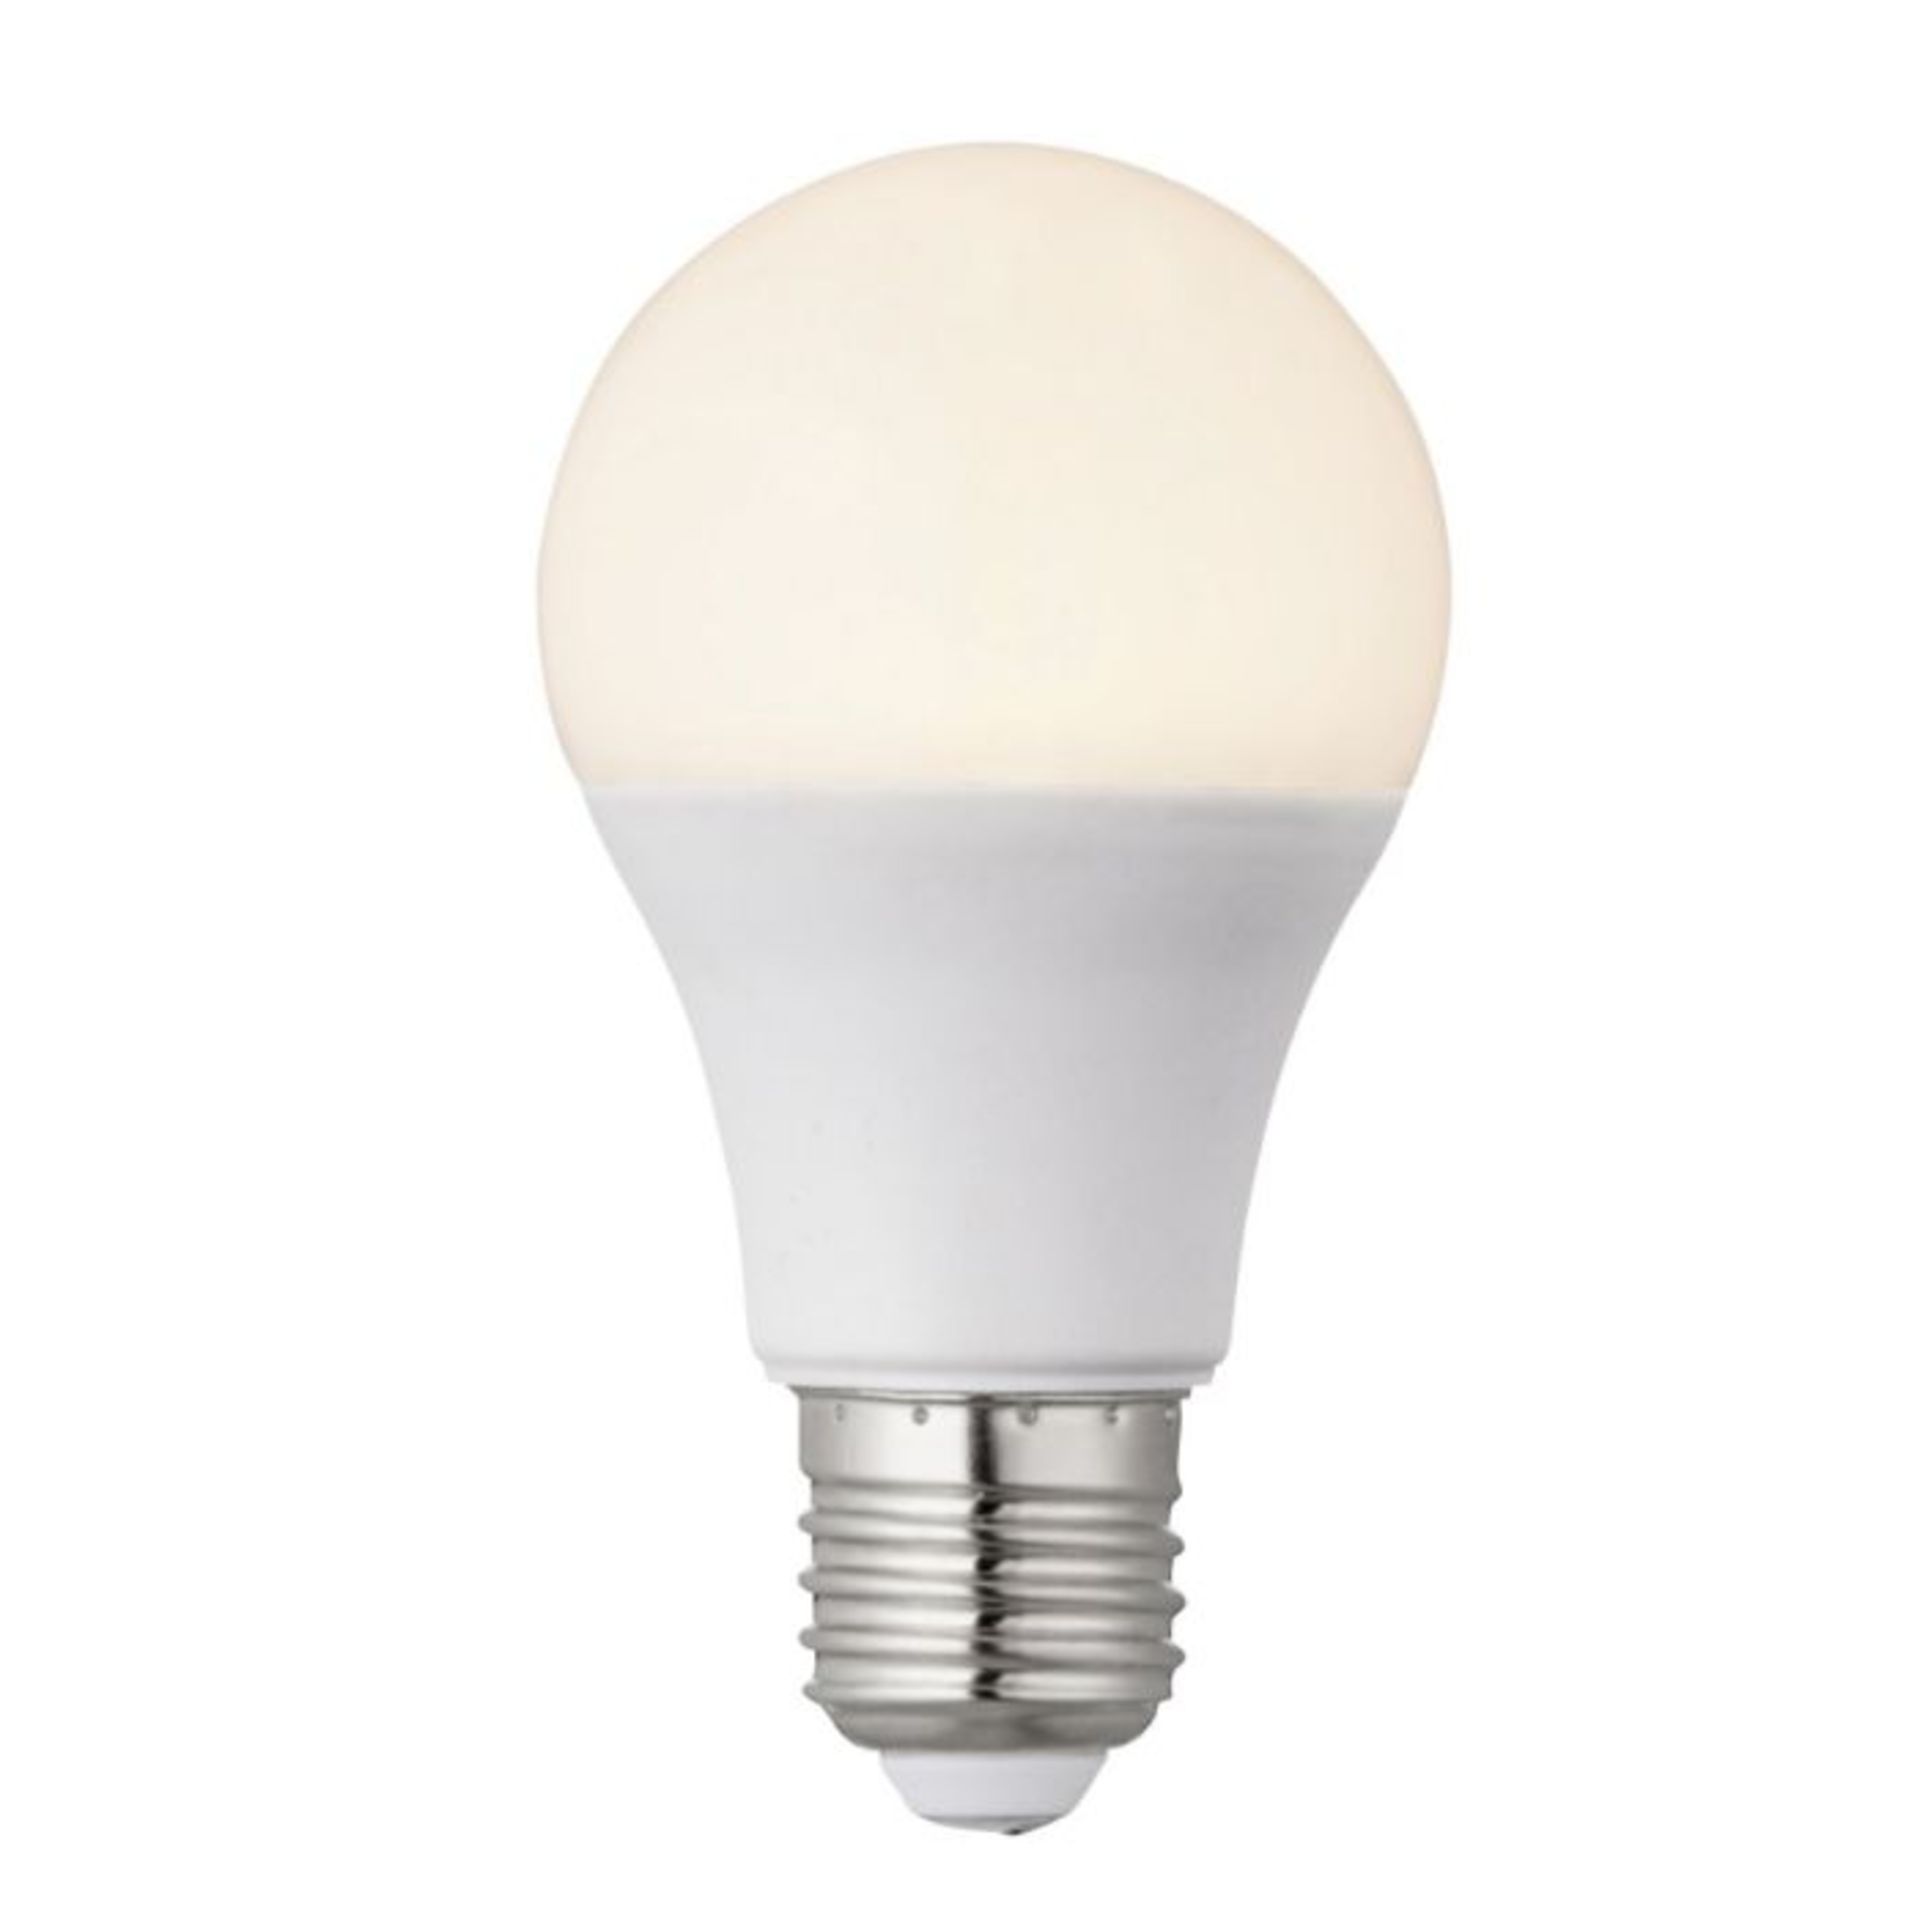 Wayfair Basics E27 LED 10W GLS Light Bulb (3000k Warm White) - RRP £6.99 (MSUN2177 - 27255)